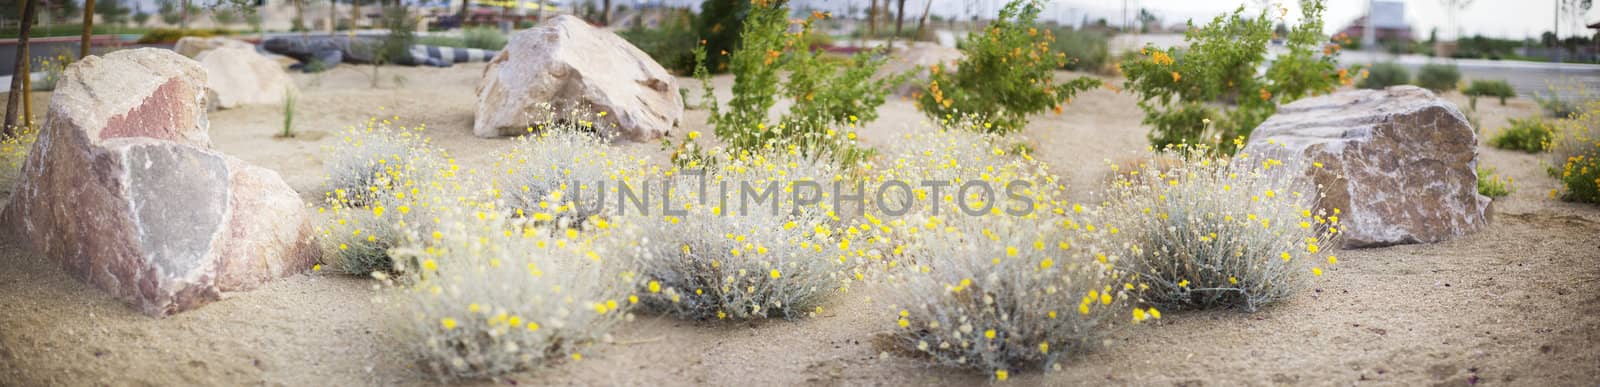 panoramic lanscape of desert flowers by bellemedia